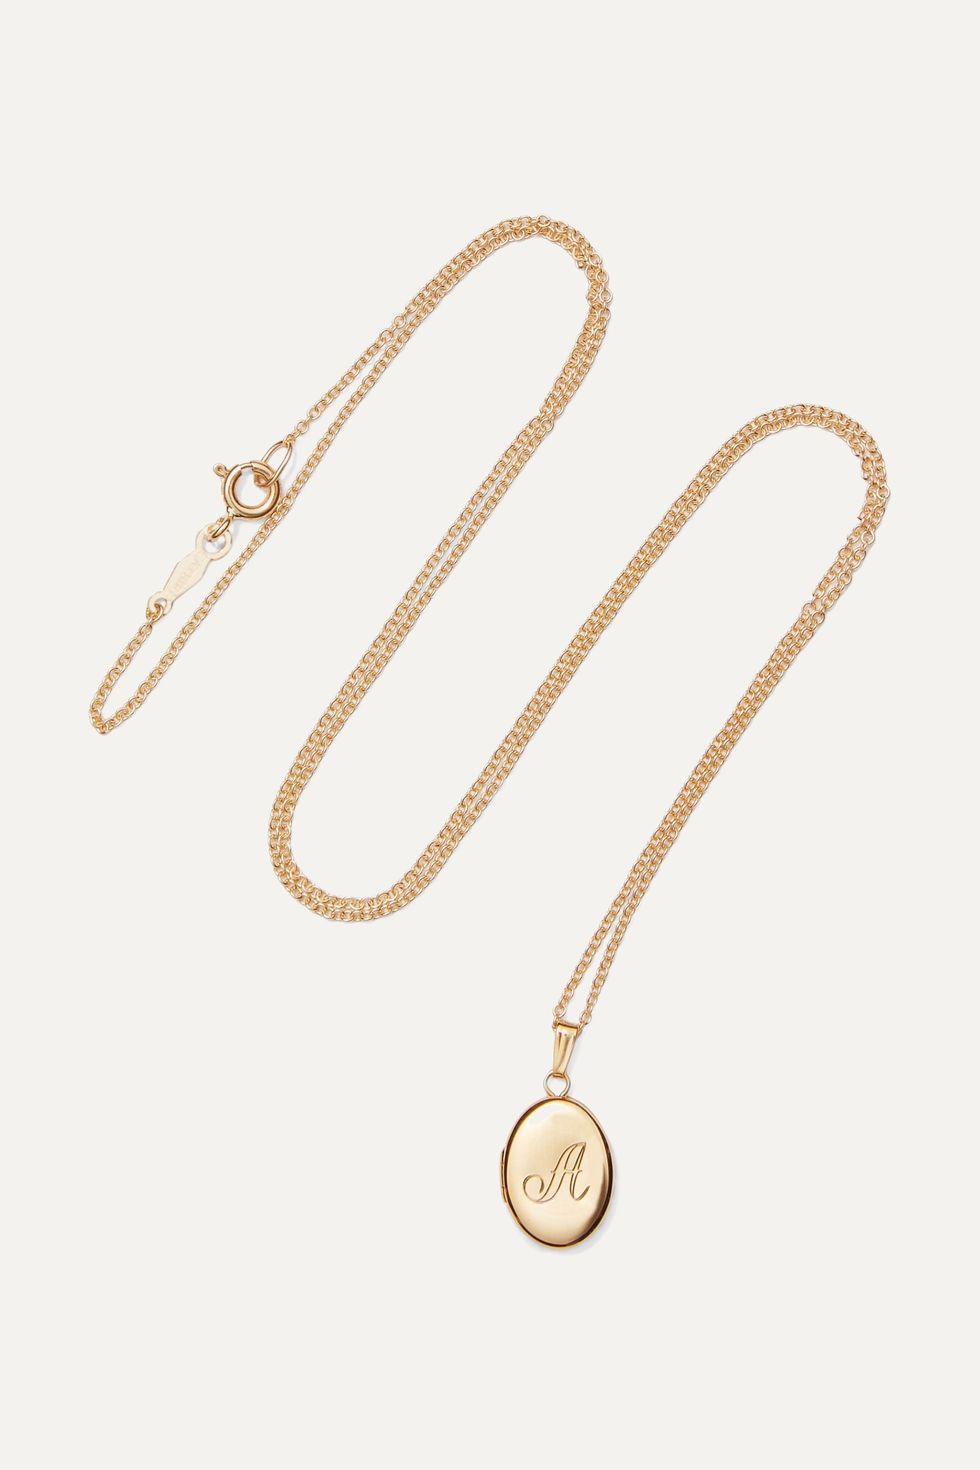 + NET SUSTAIN Dollhouse 14-karat gold necklace